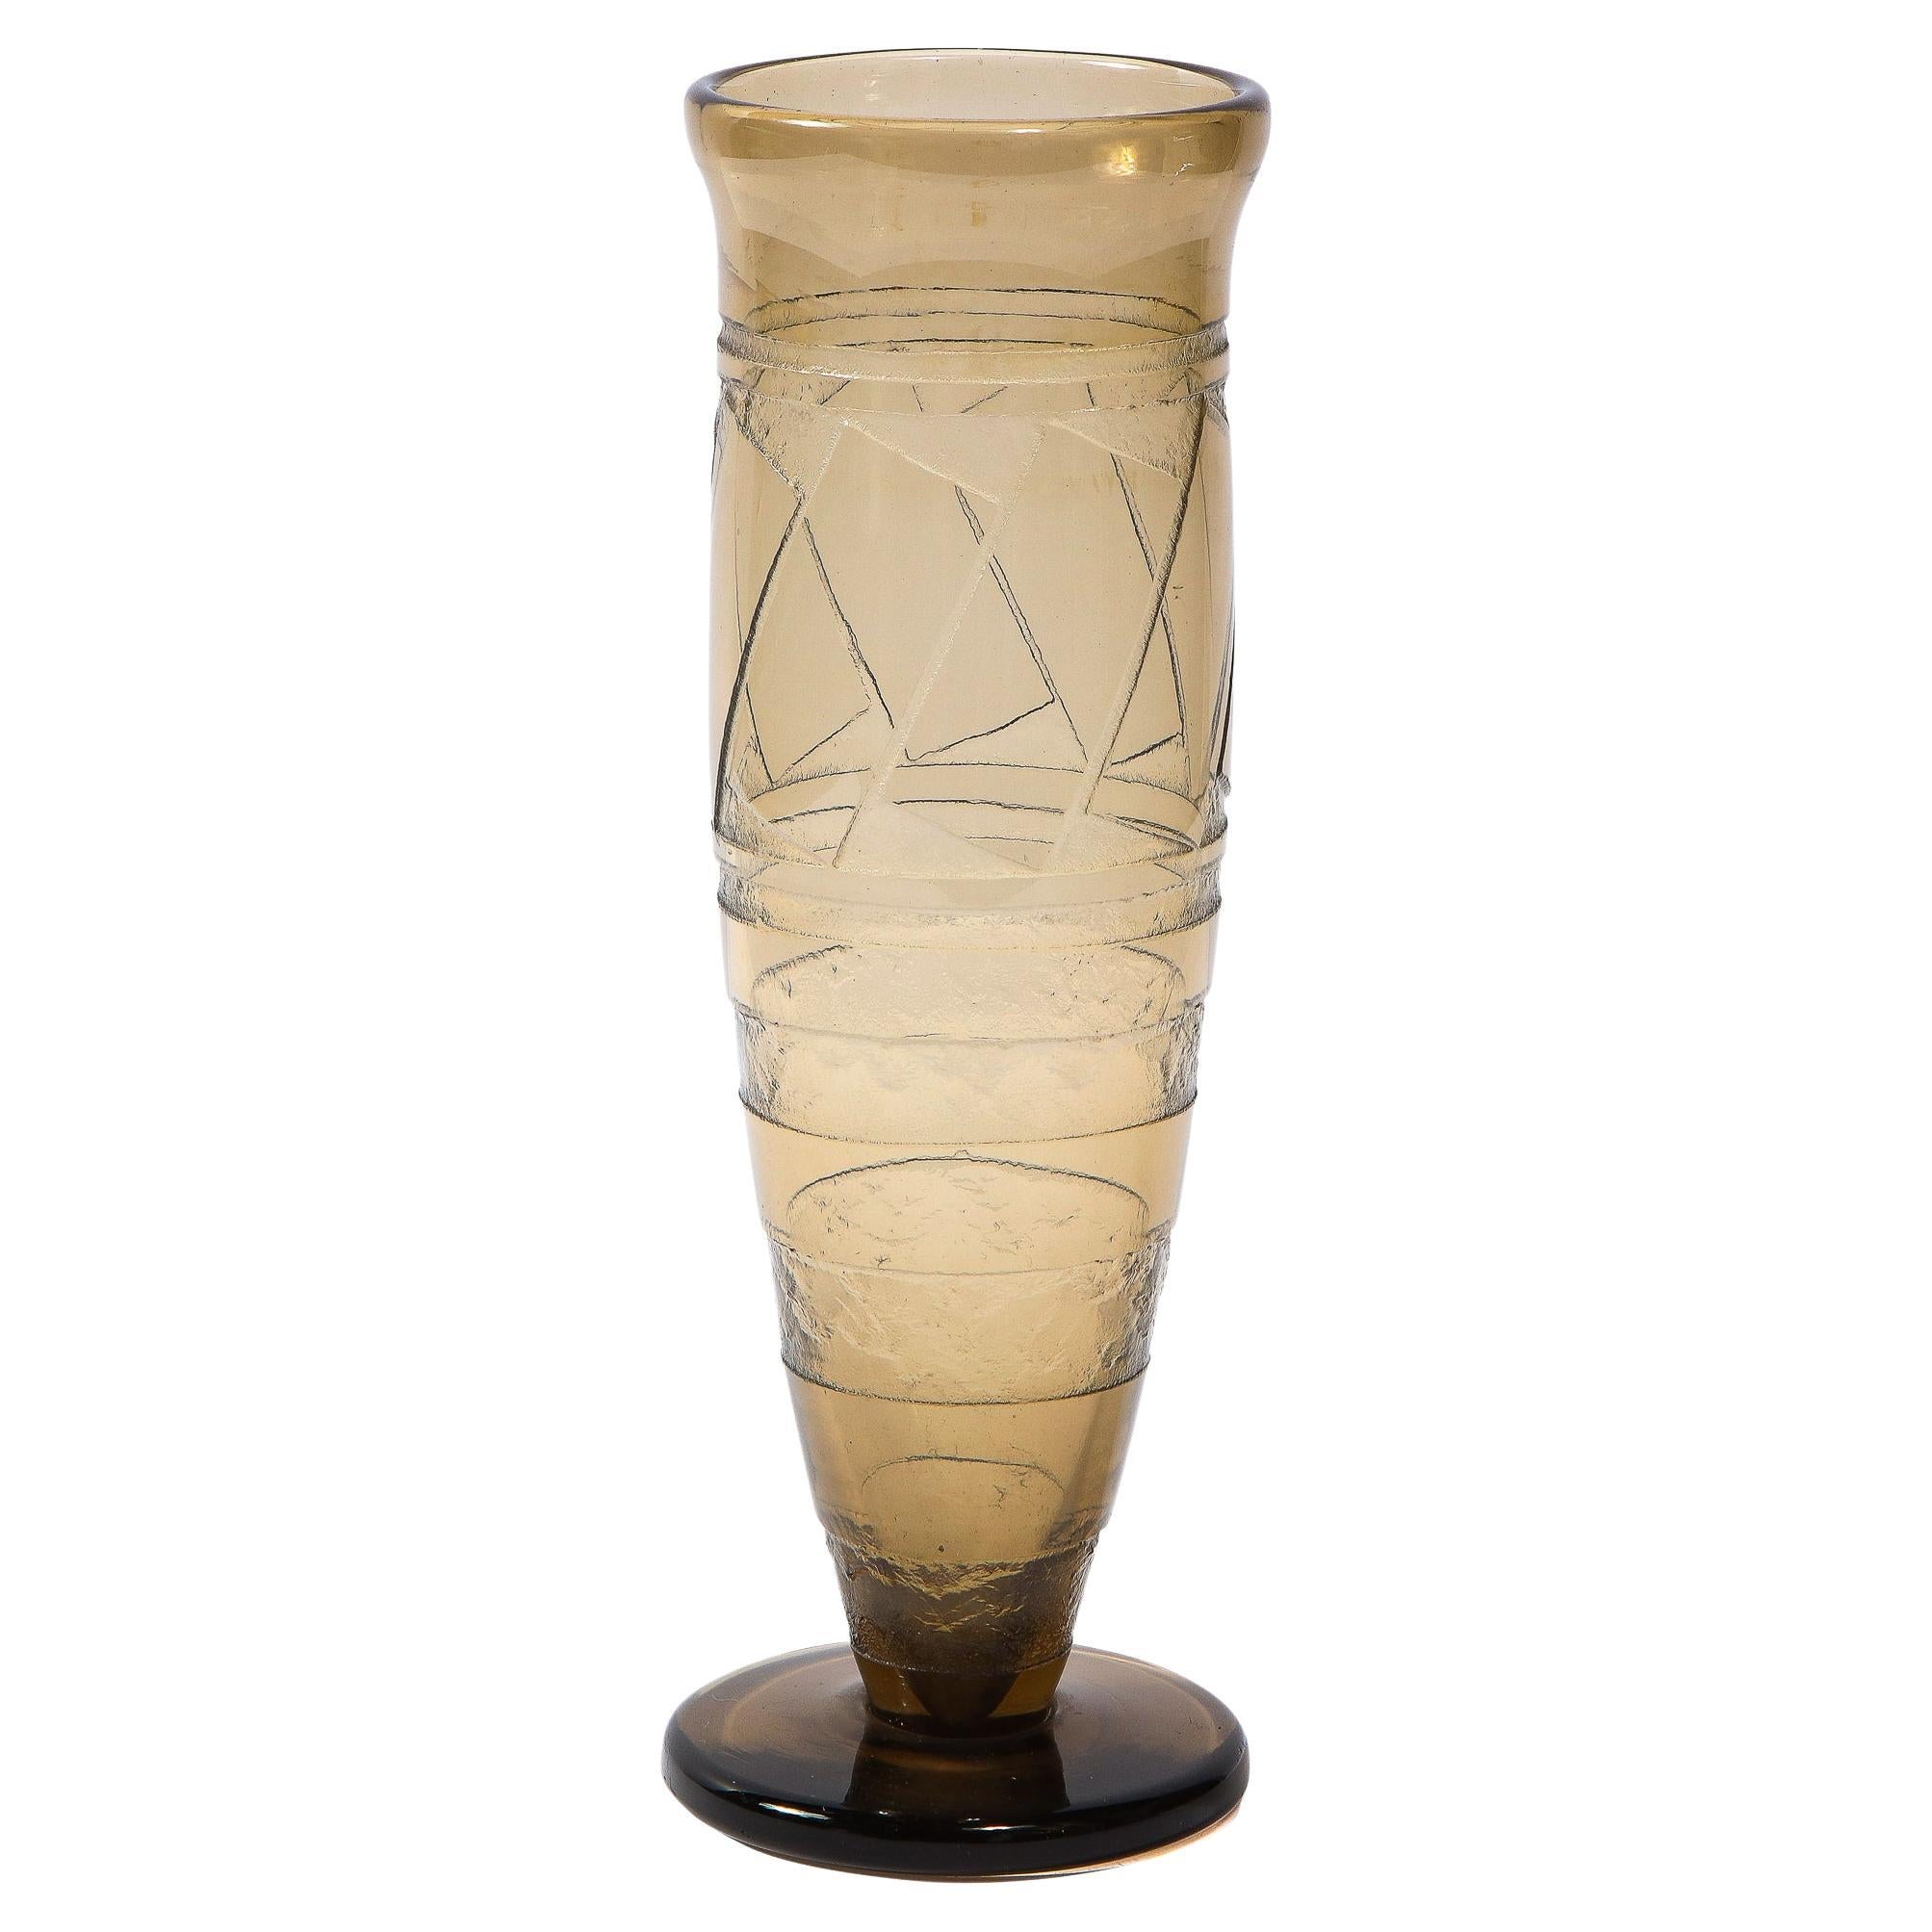 1930s Slender Art Deco Topaz Glass Vase, Signed by Schneider